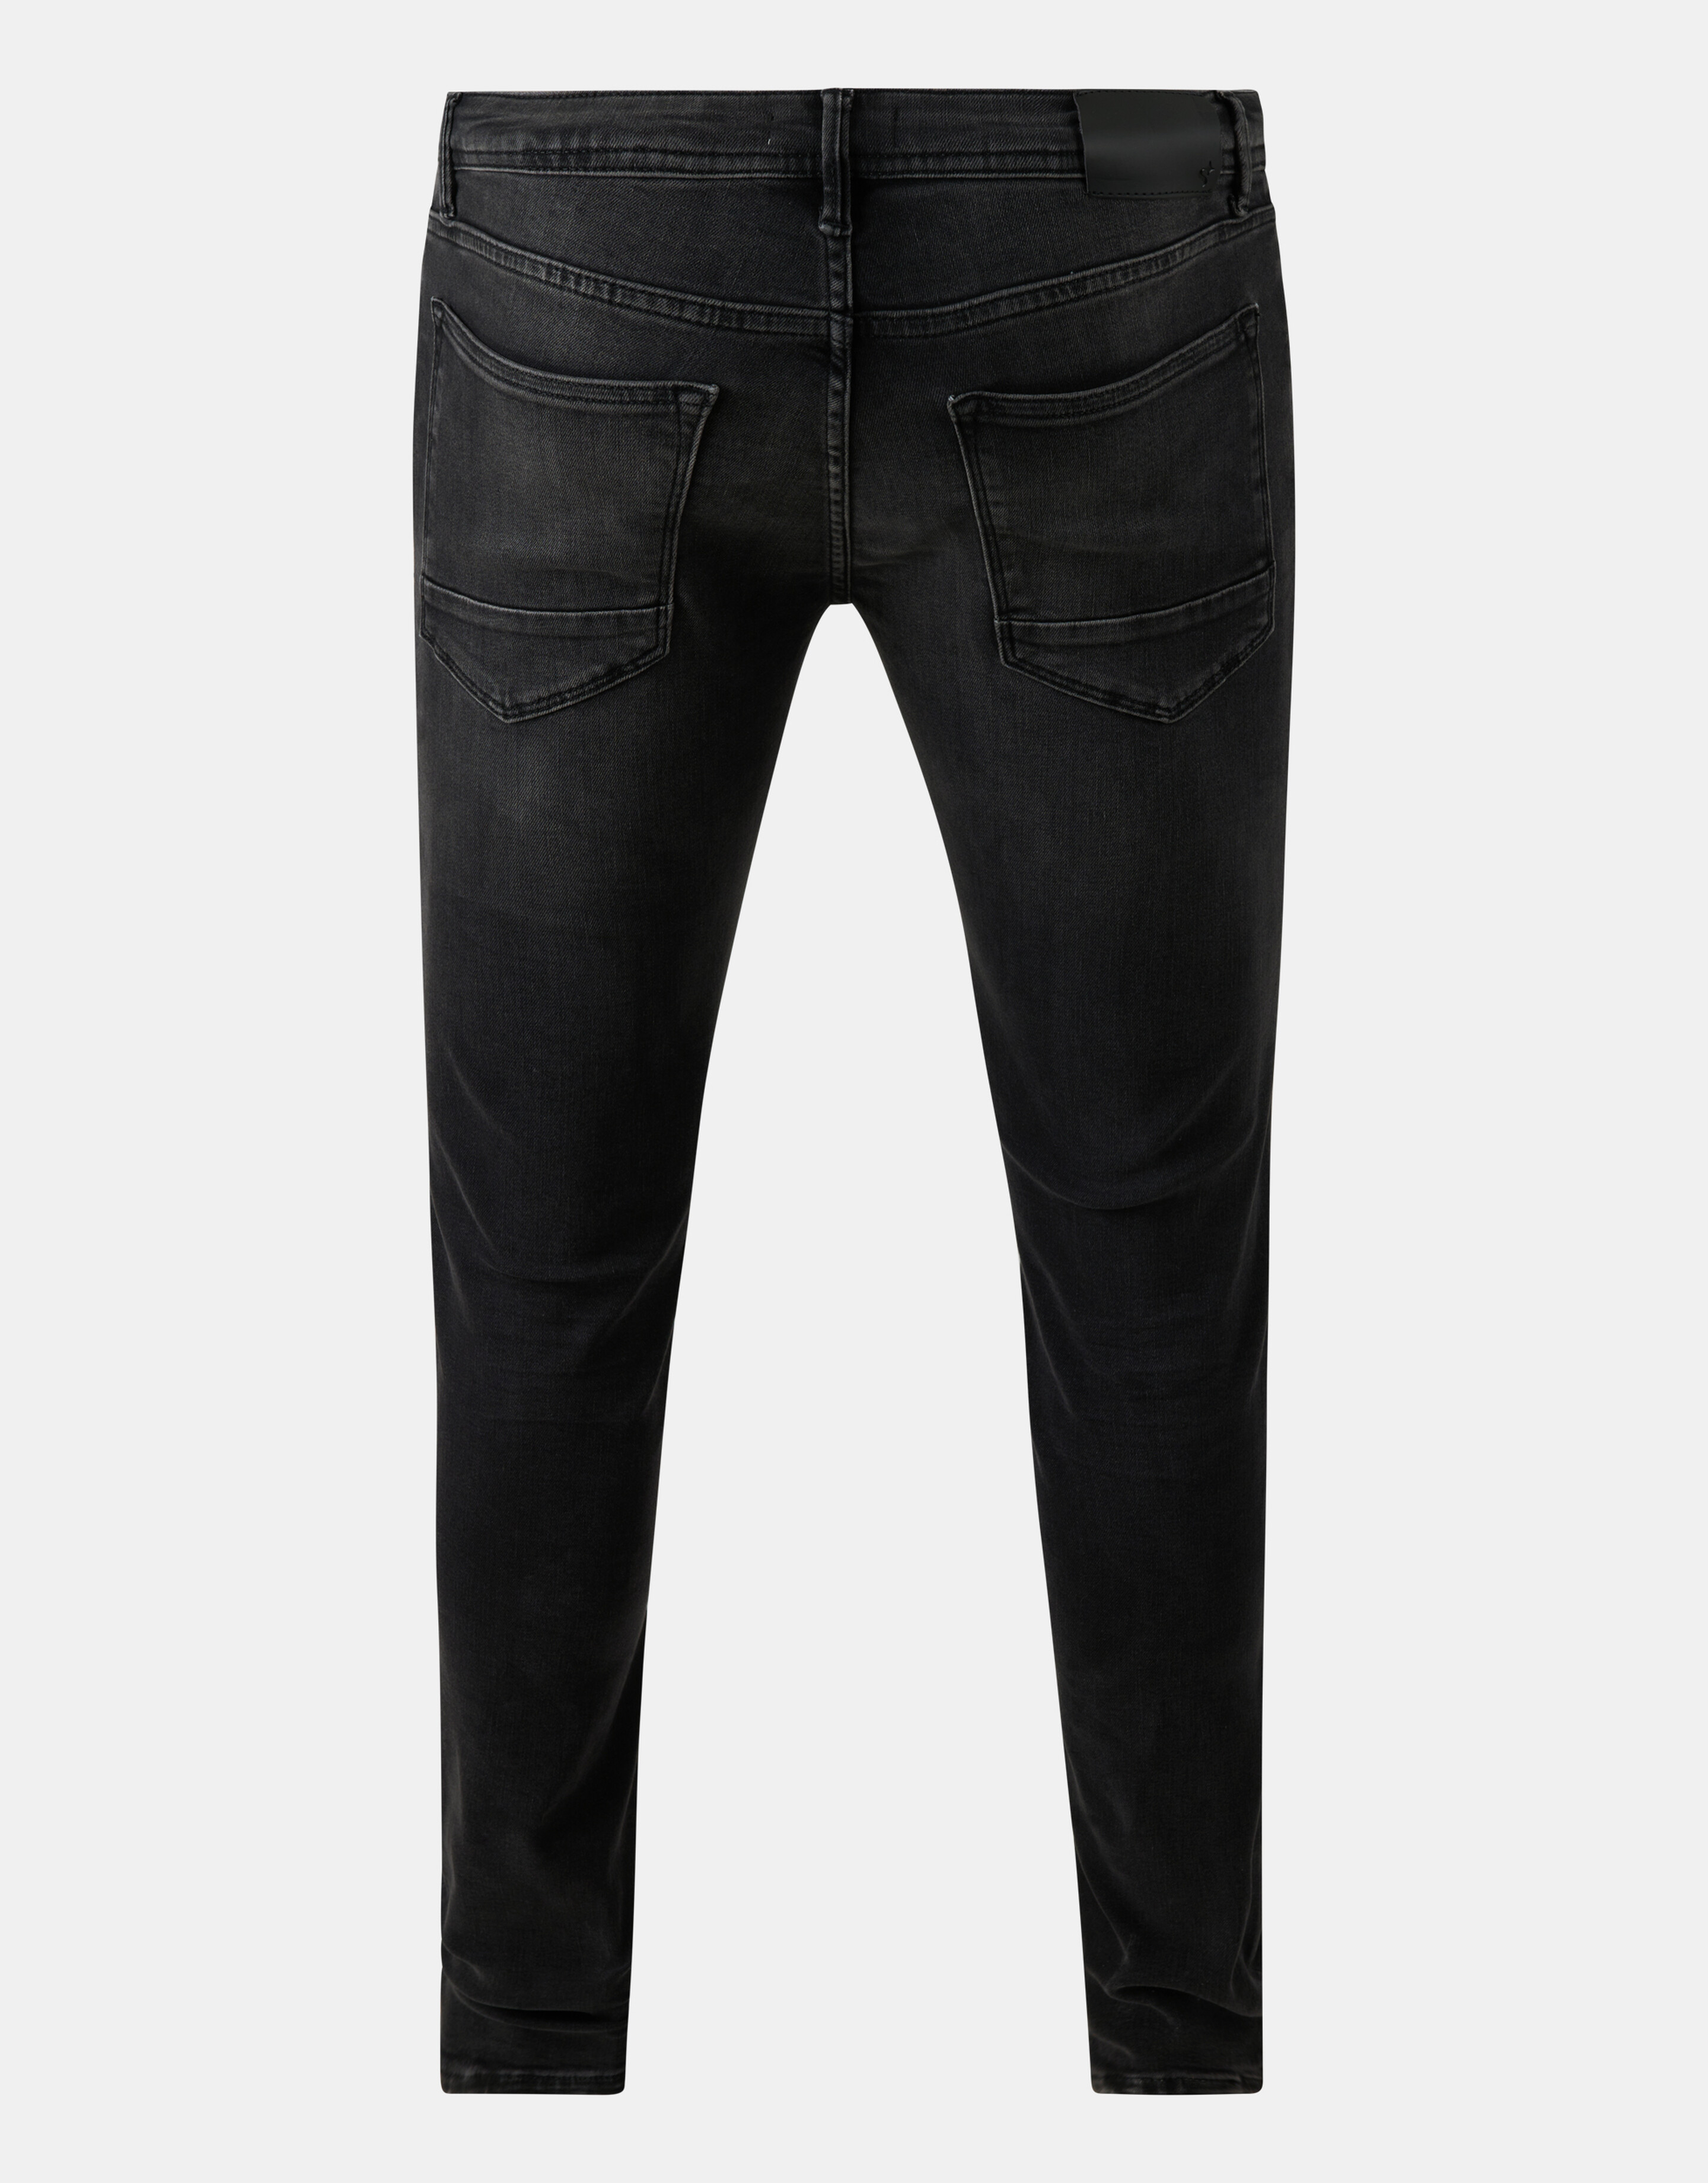 Slim Jeans Schwarz L32 Refill